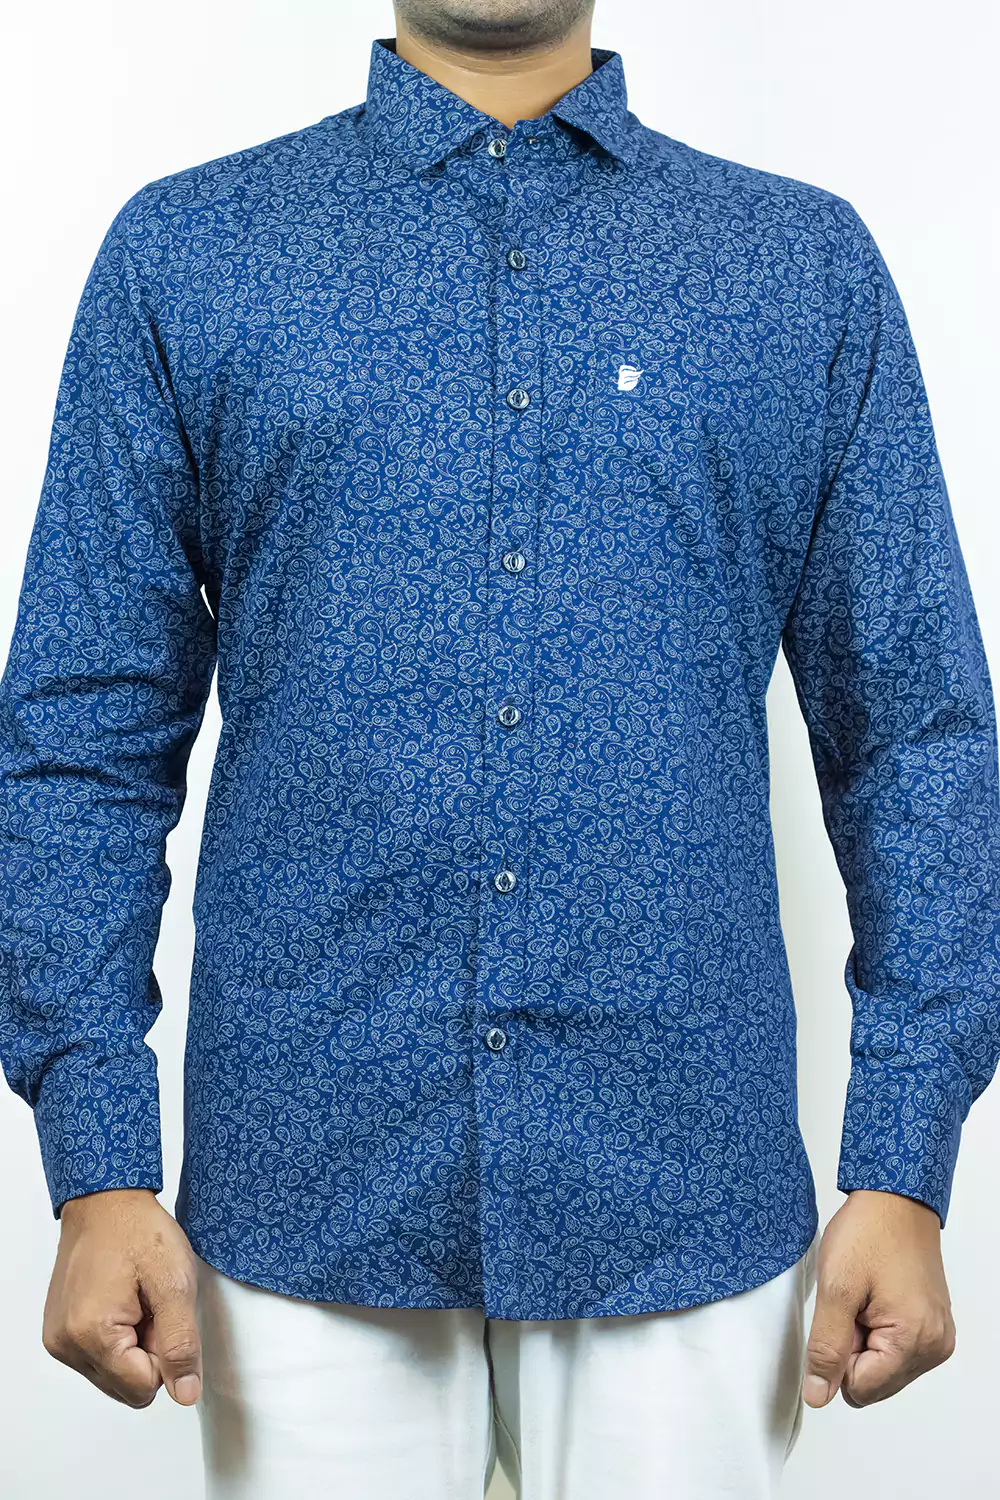 Azure Blue Paisley Printed Shirt